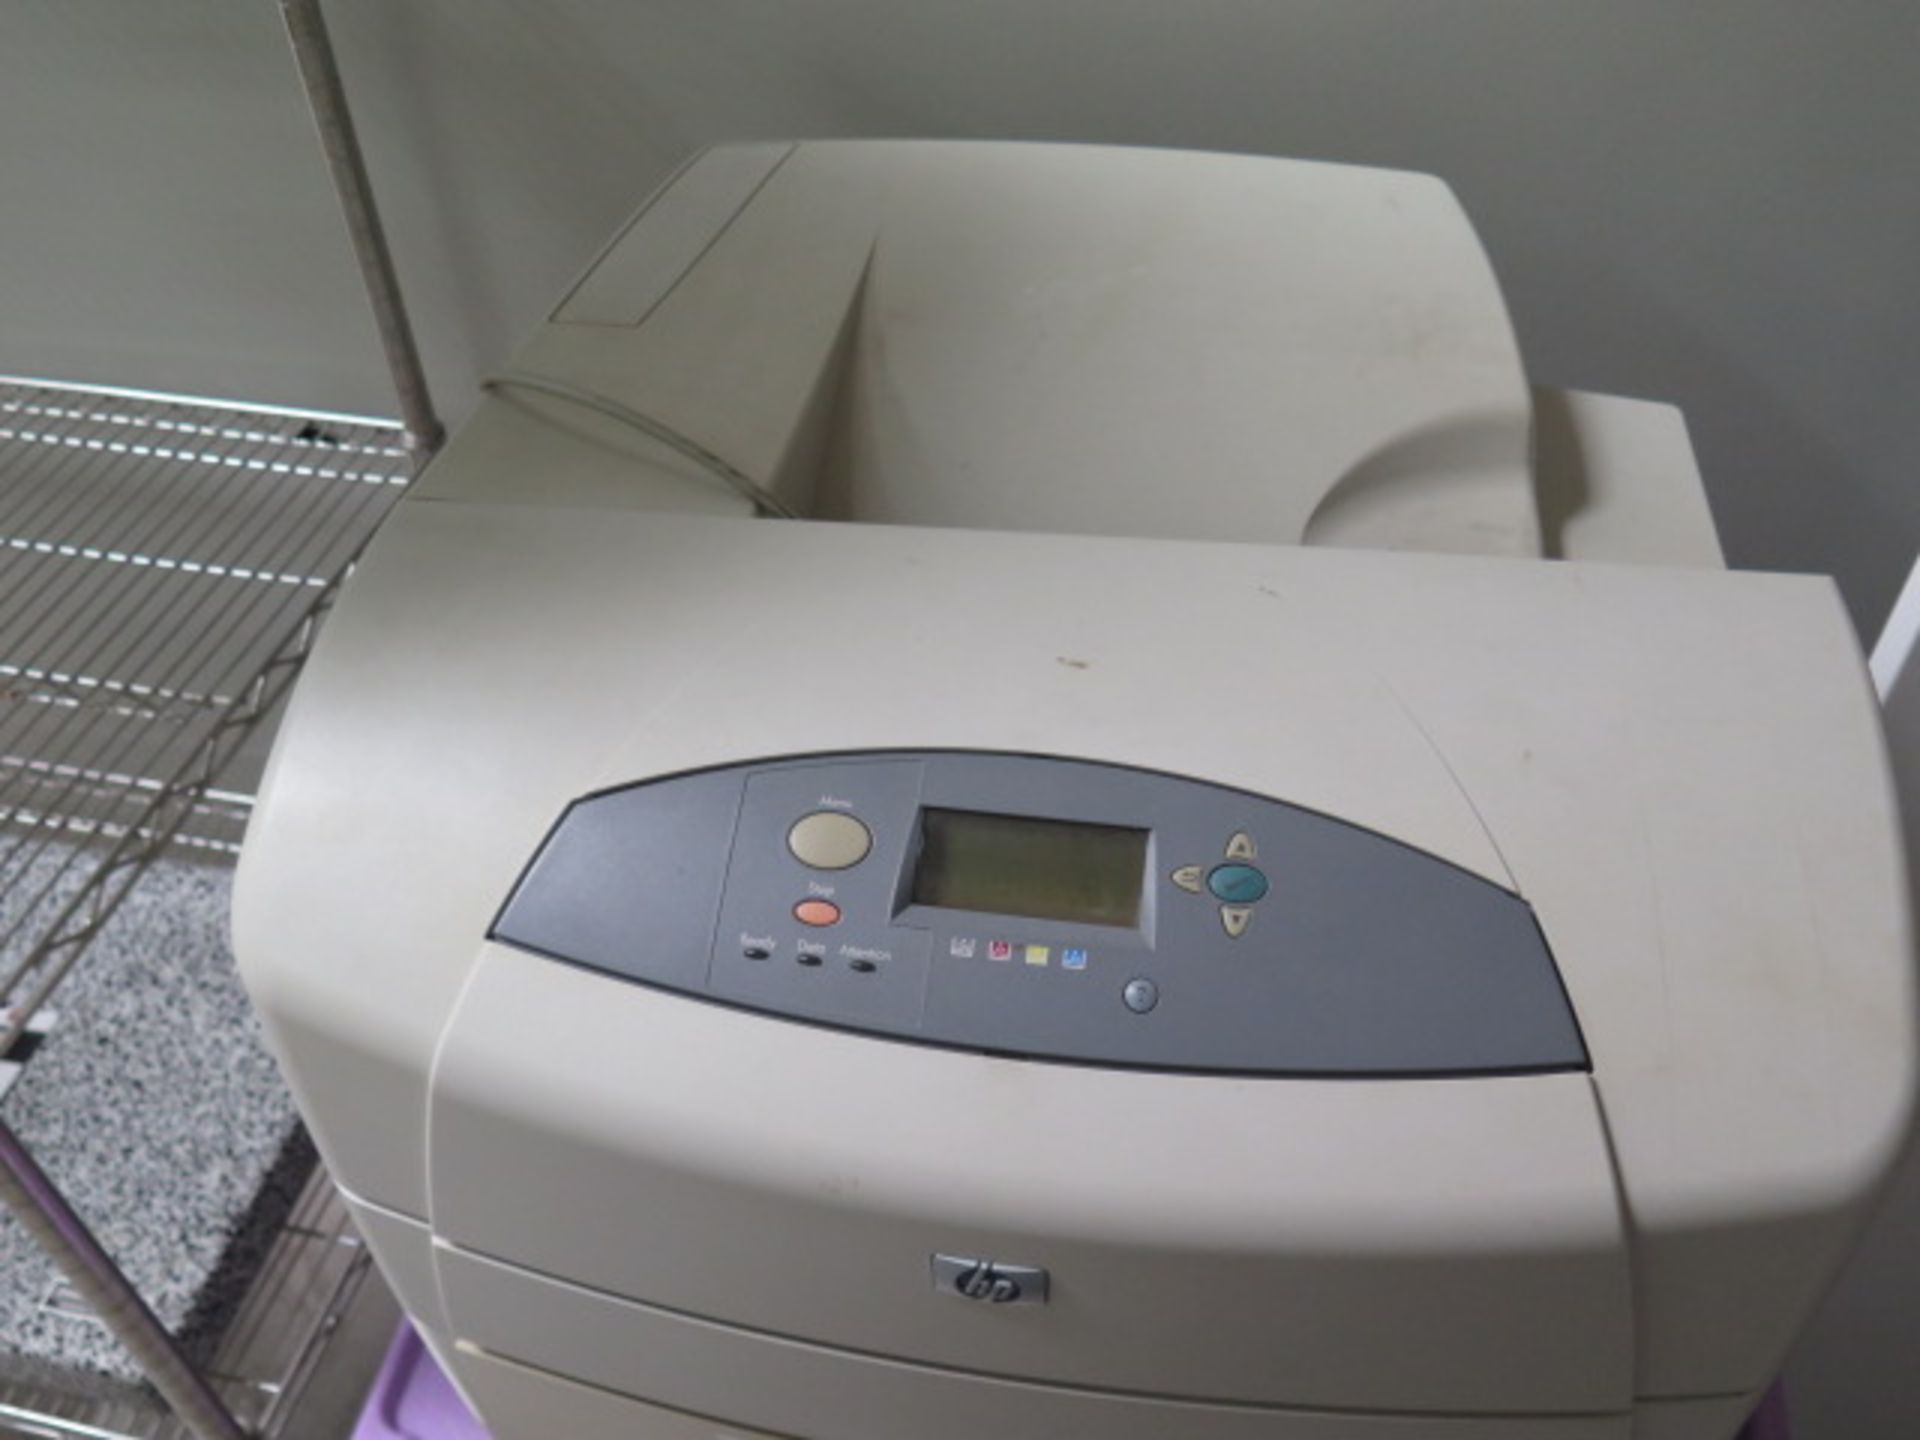 Hewlett Packard Color LaserJet 5550dn Color Printer (SOLD AS-IS - NO WARRANTY) - Image 3 of 6